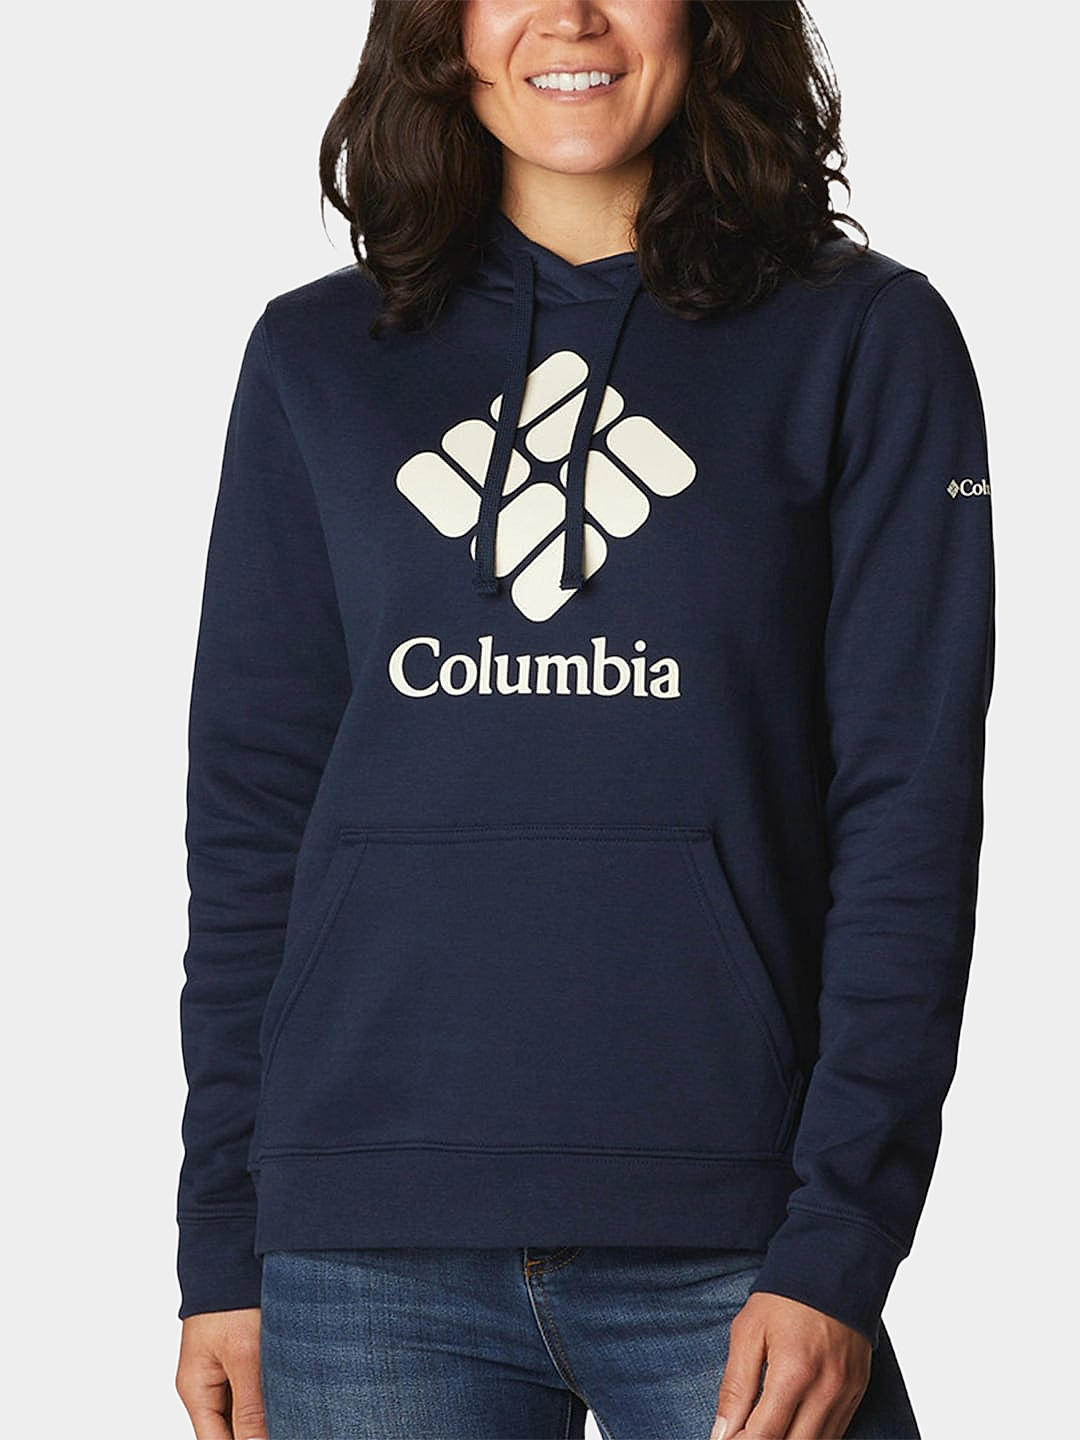 Columbia Navy Trek Graphic Hooded Sweatshirt